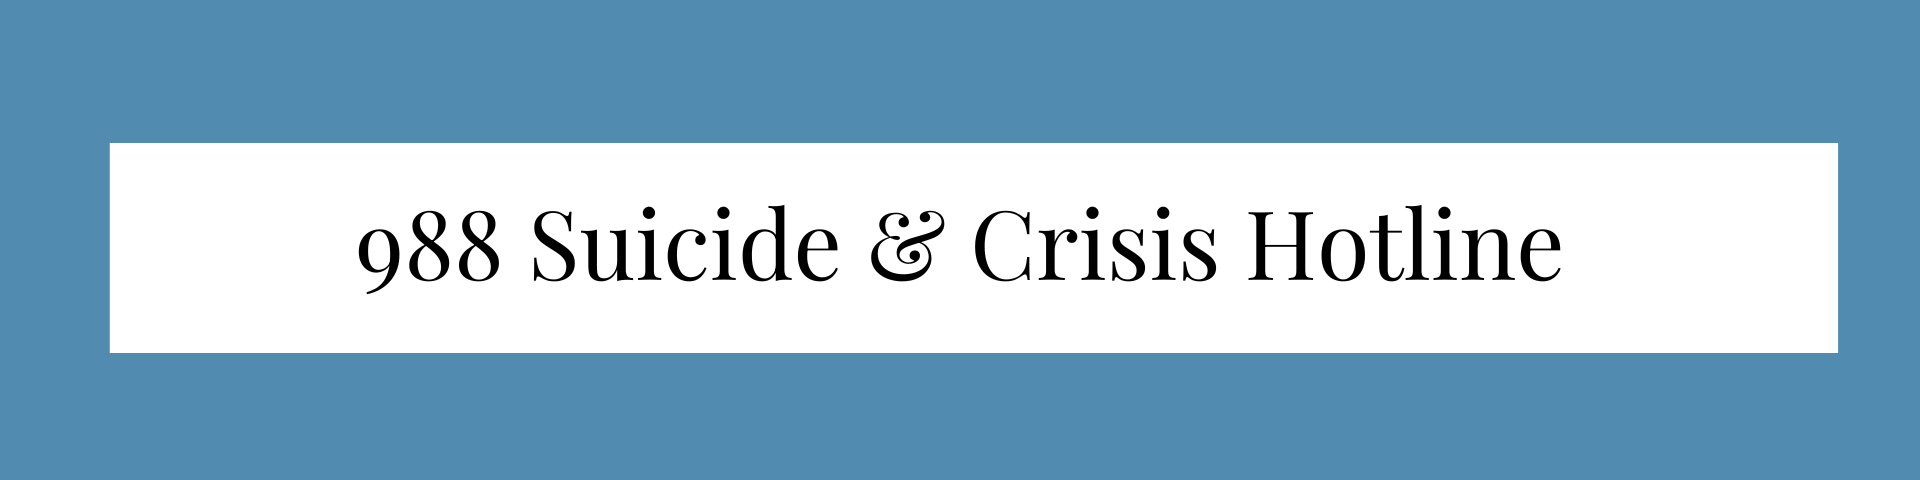 988 Suicide & Crisis Hotline (Link)